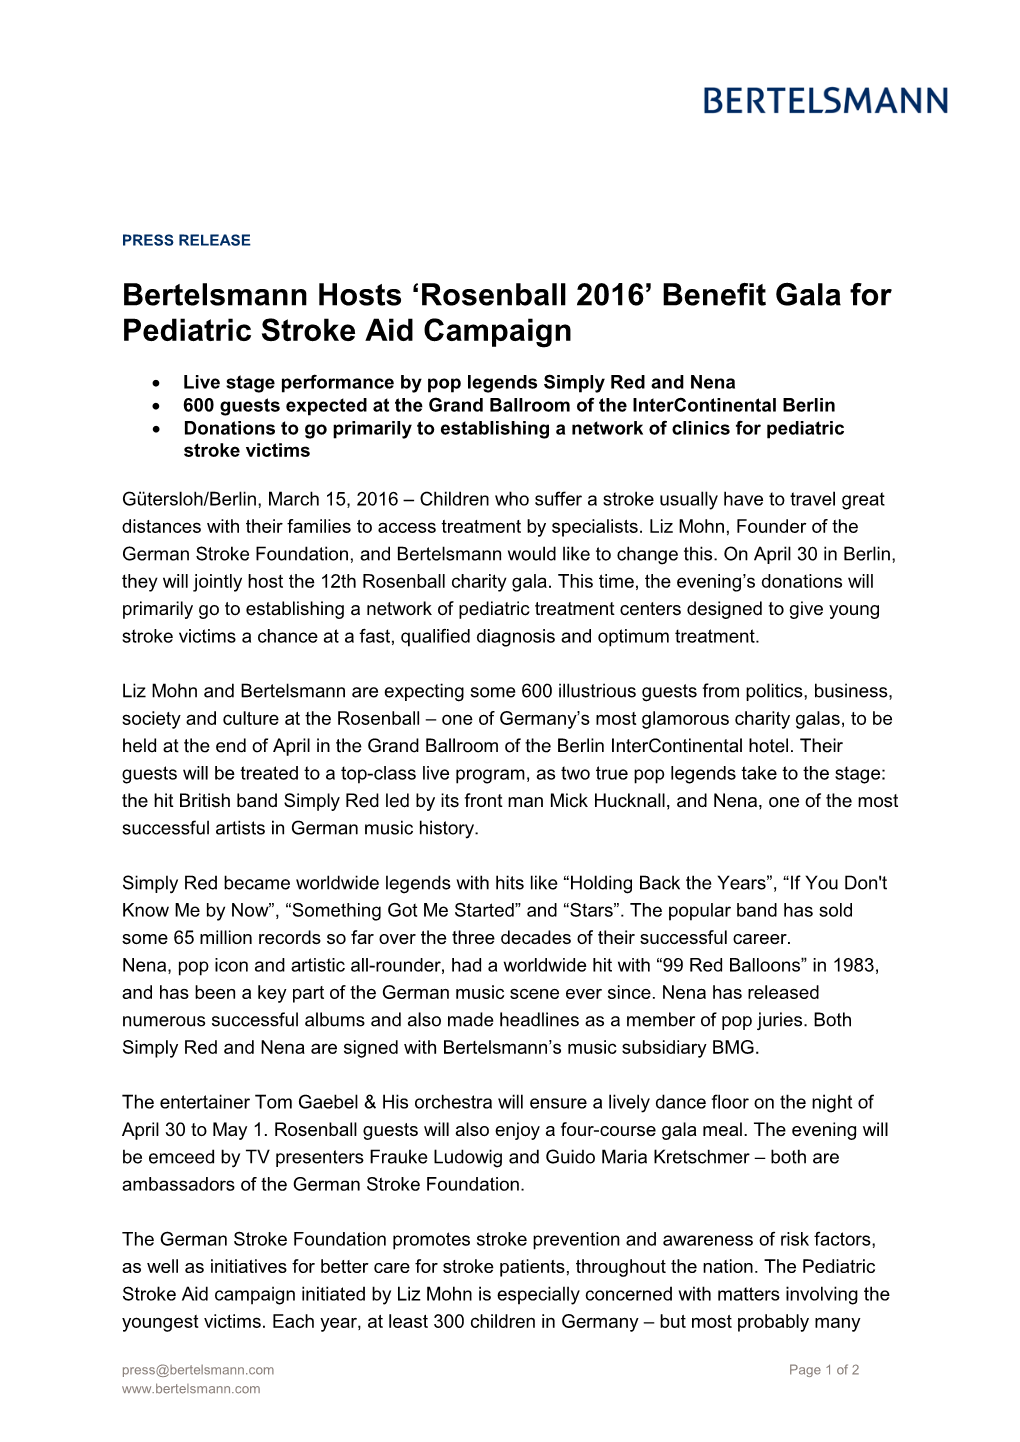 'Rosenball 2016' Benefit Gala for Pediatric Stroke Aid Campaign